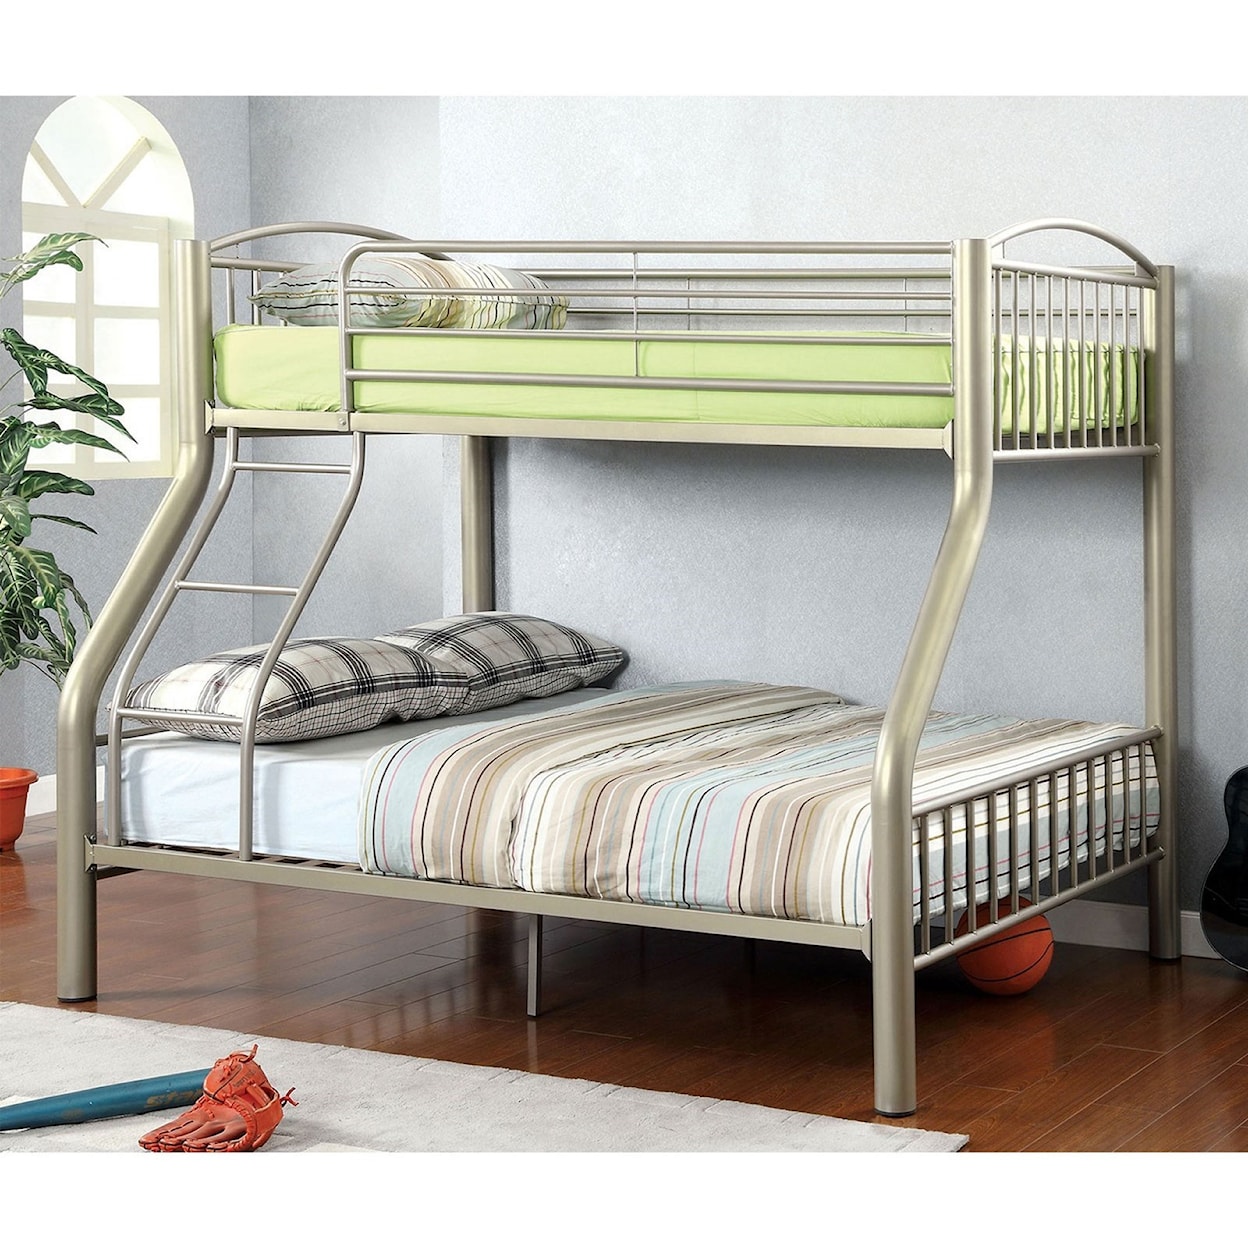 Furniture of America Lovia Twin/Full Bunk Bed